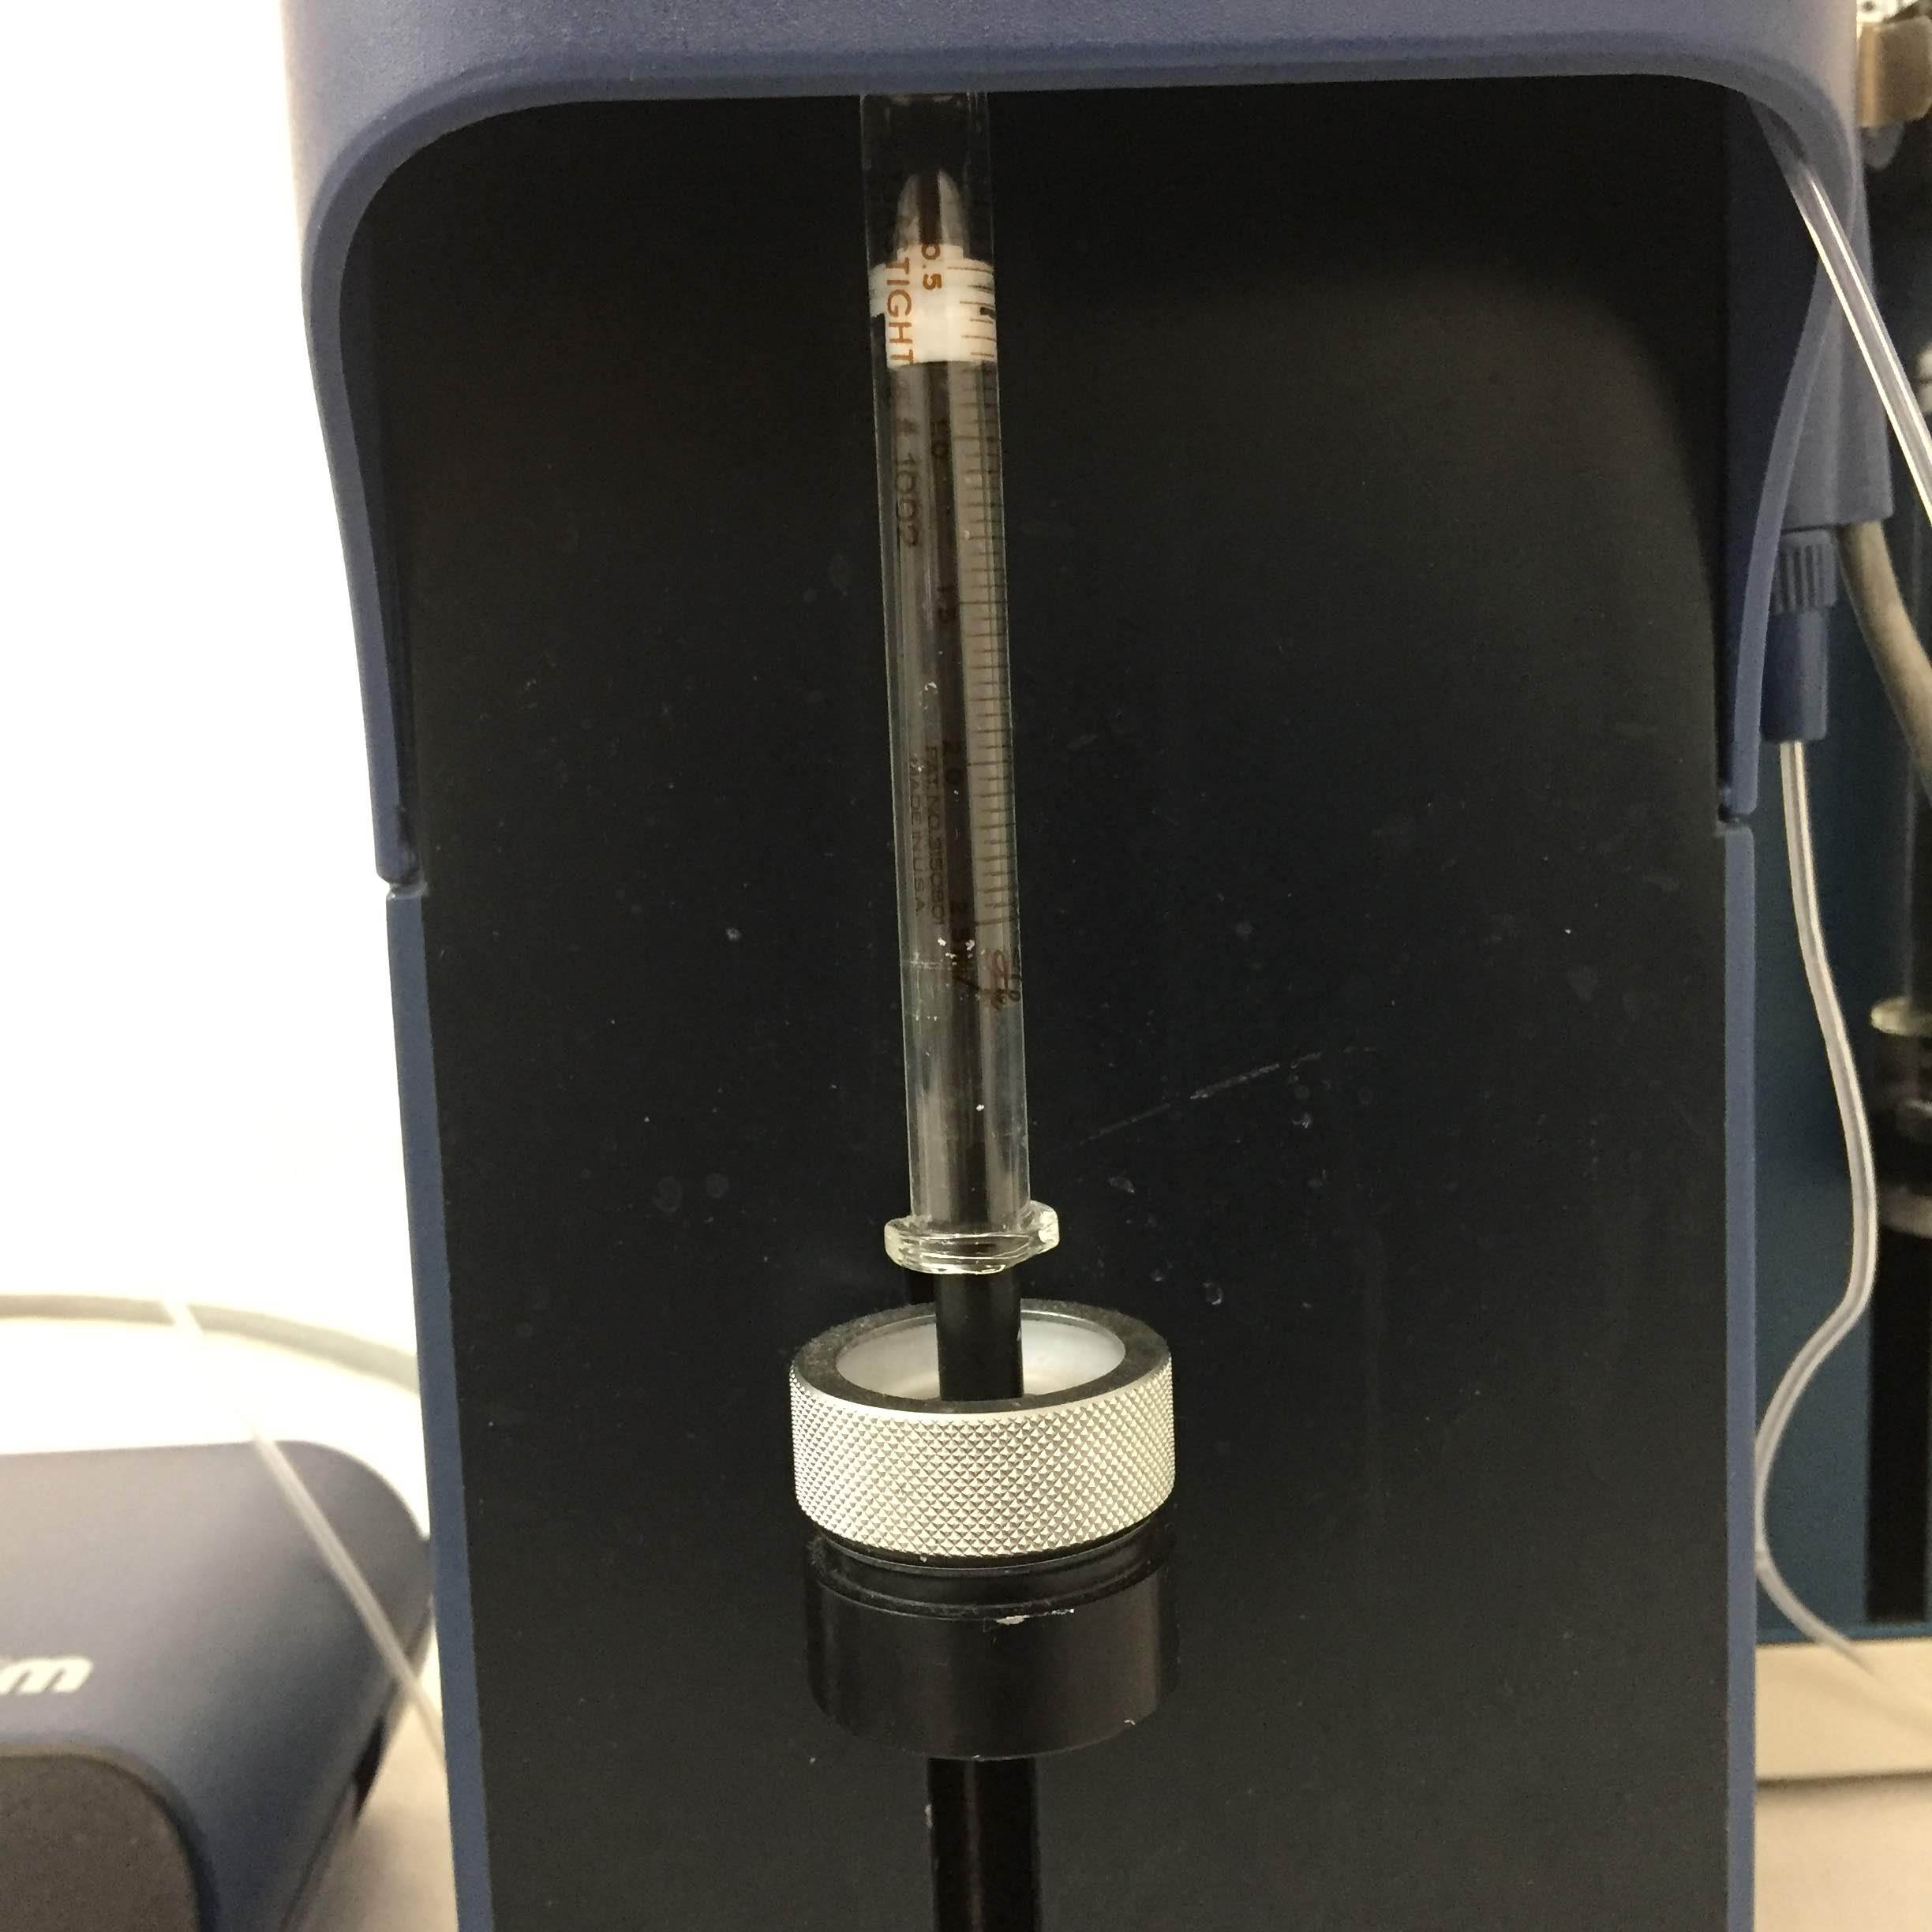 hamilton microlab 500 series diluter pump